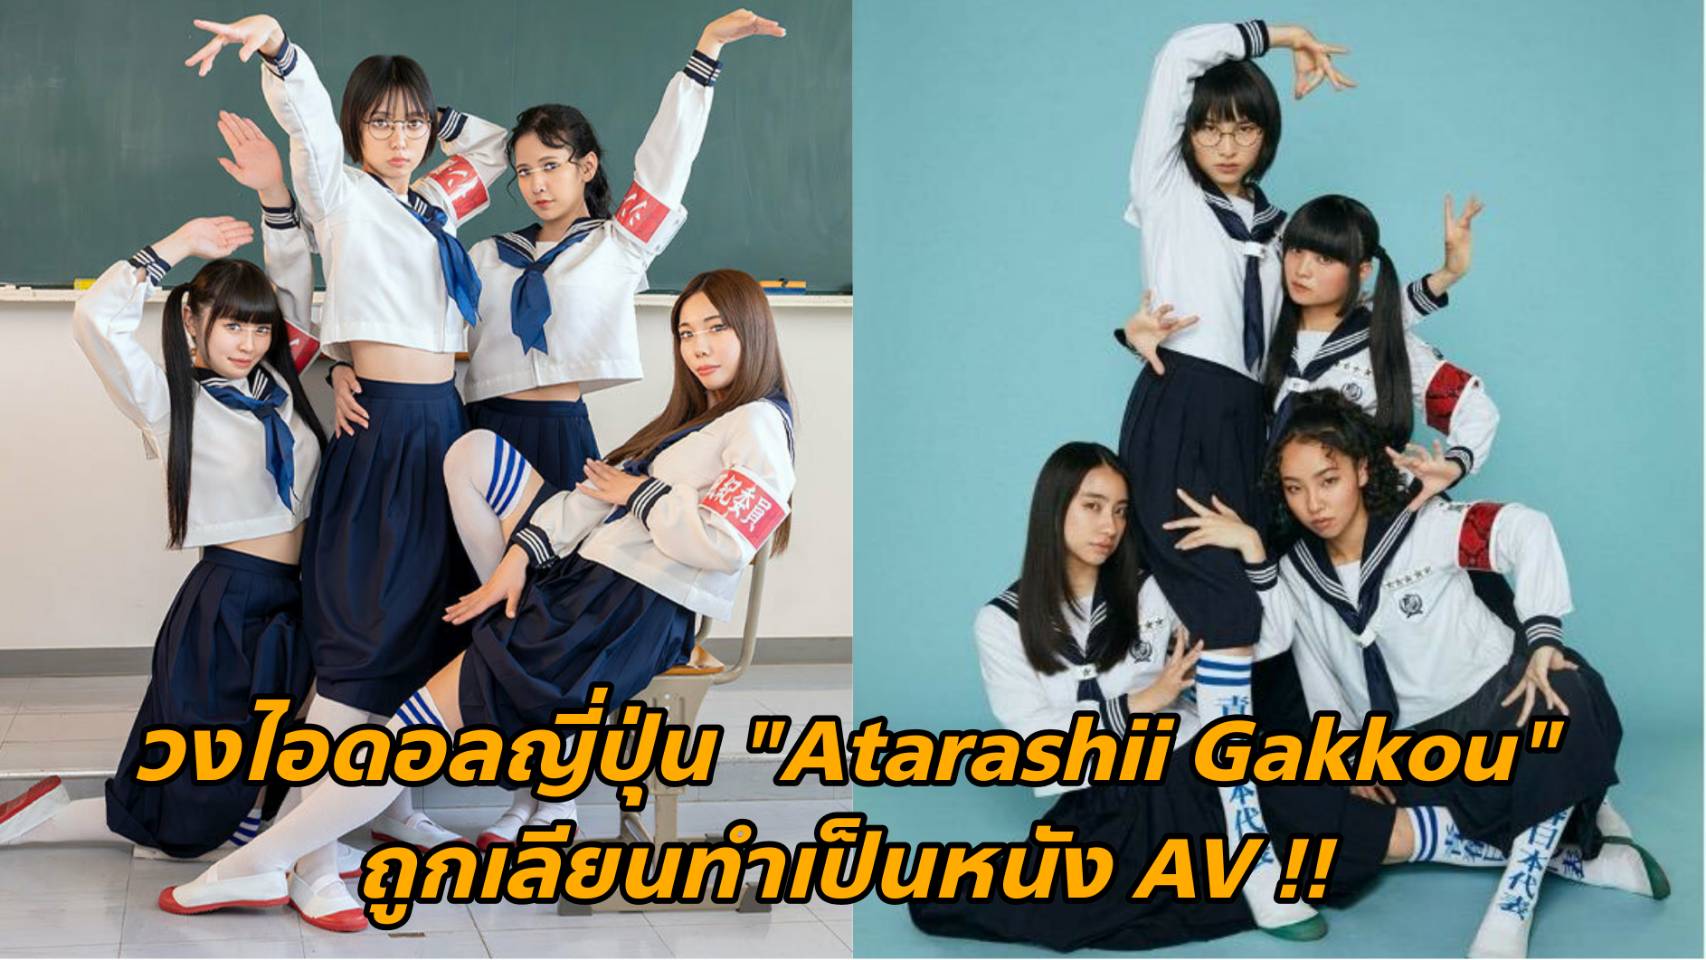 [HUNTC-006] วงไอดอลญี่ปุ่น "Atarashii Gakkou" ถูกเลียนทำเป็นหนัง AV 5